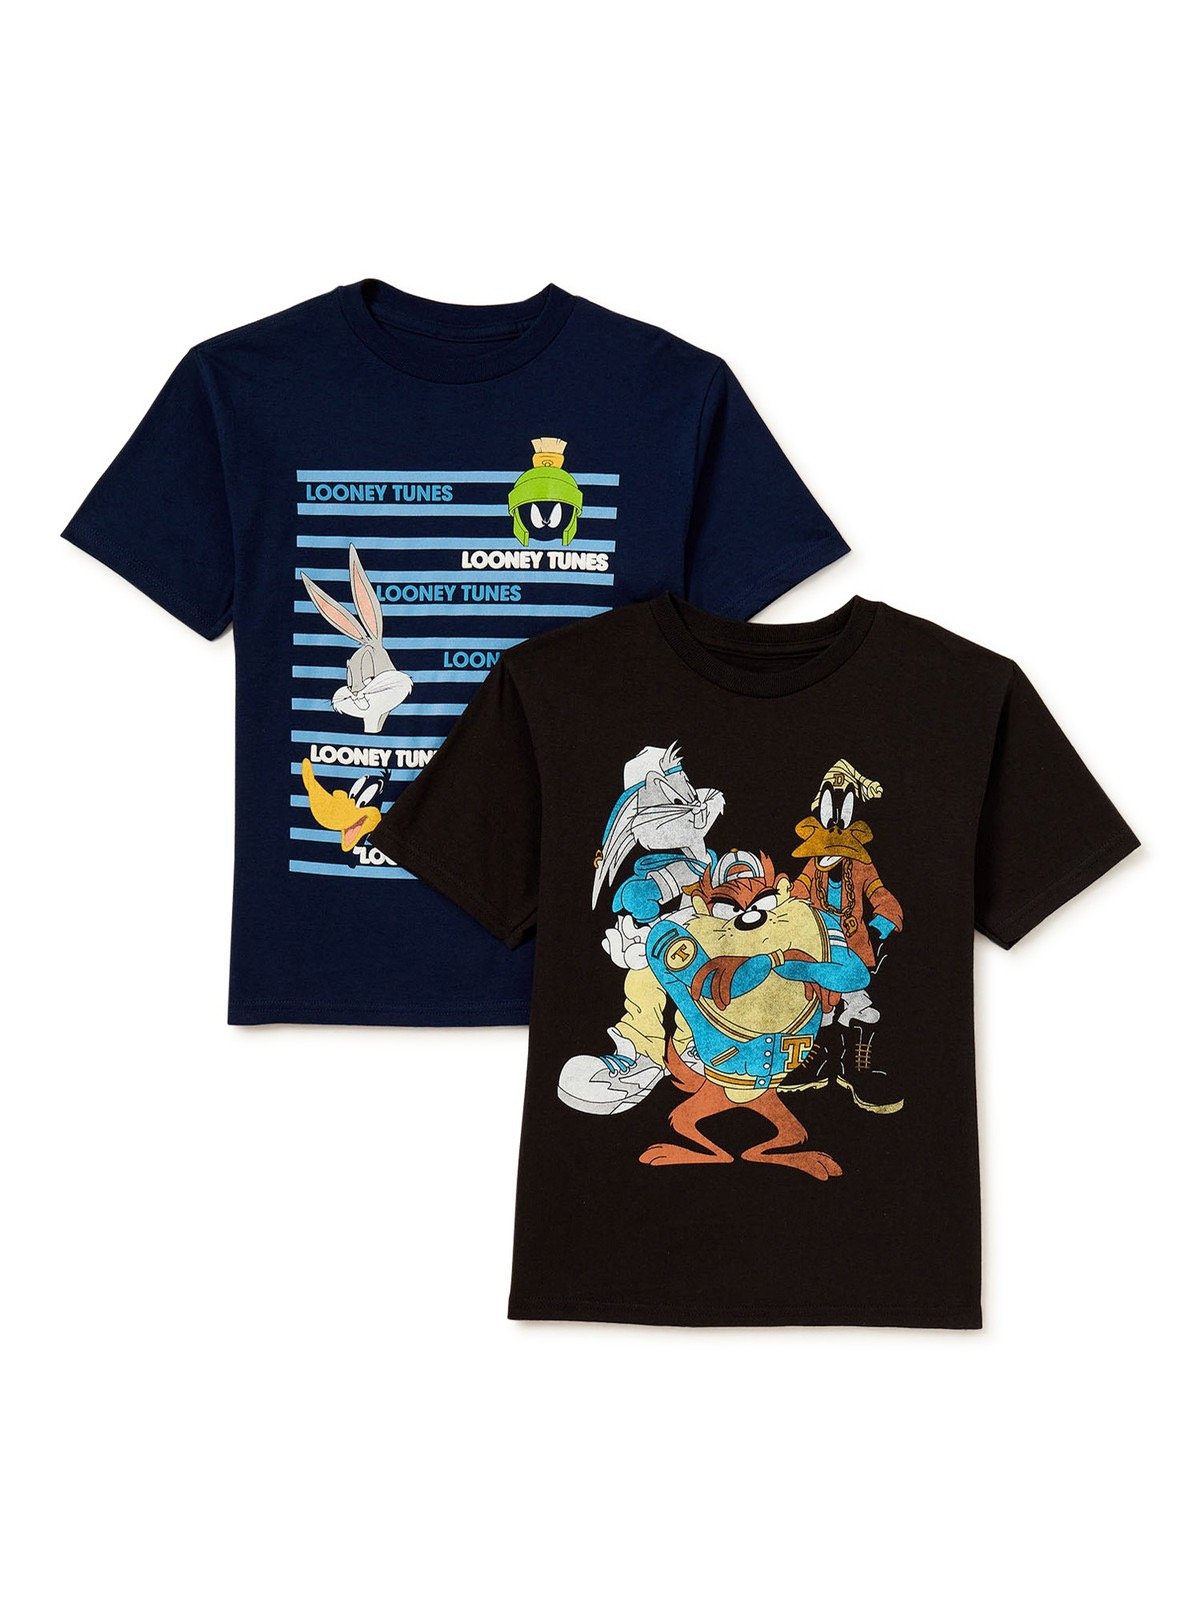 Looney Tunes Shirts